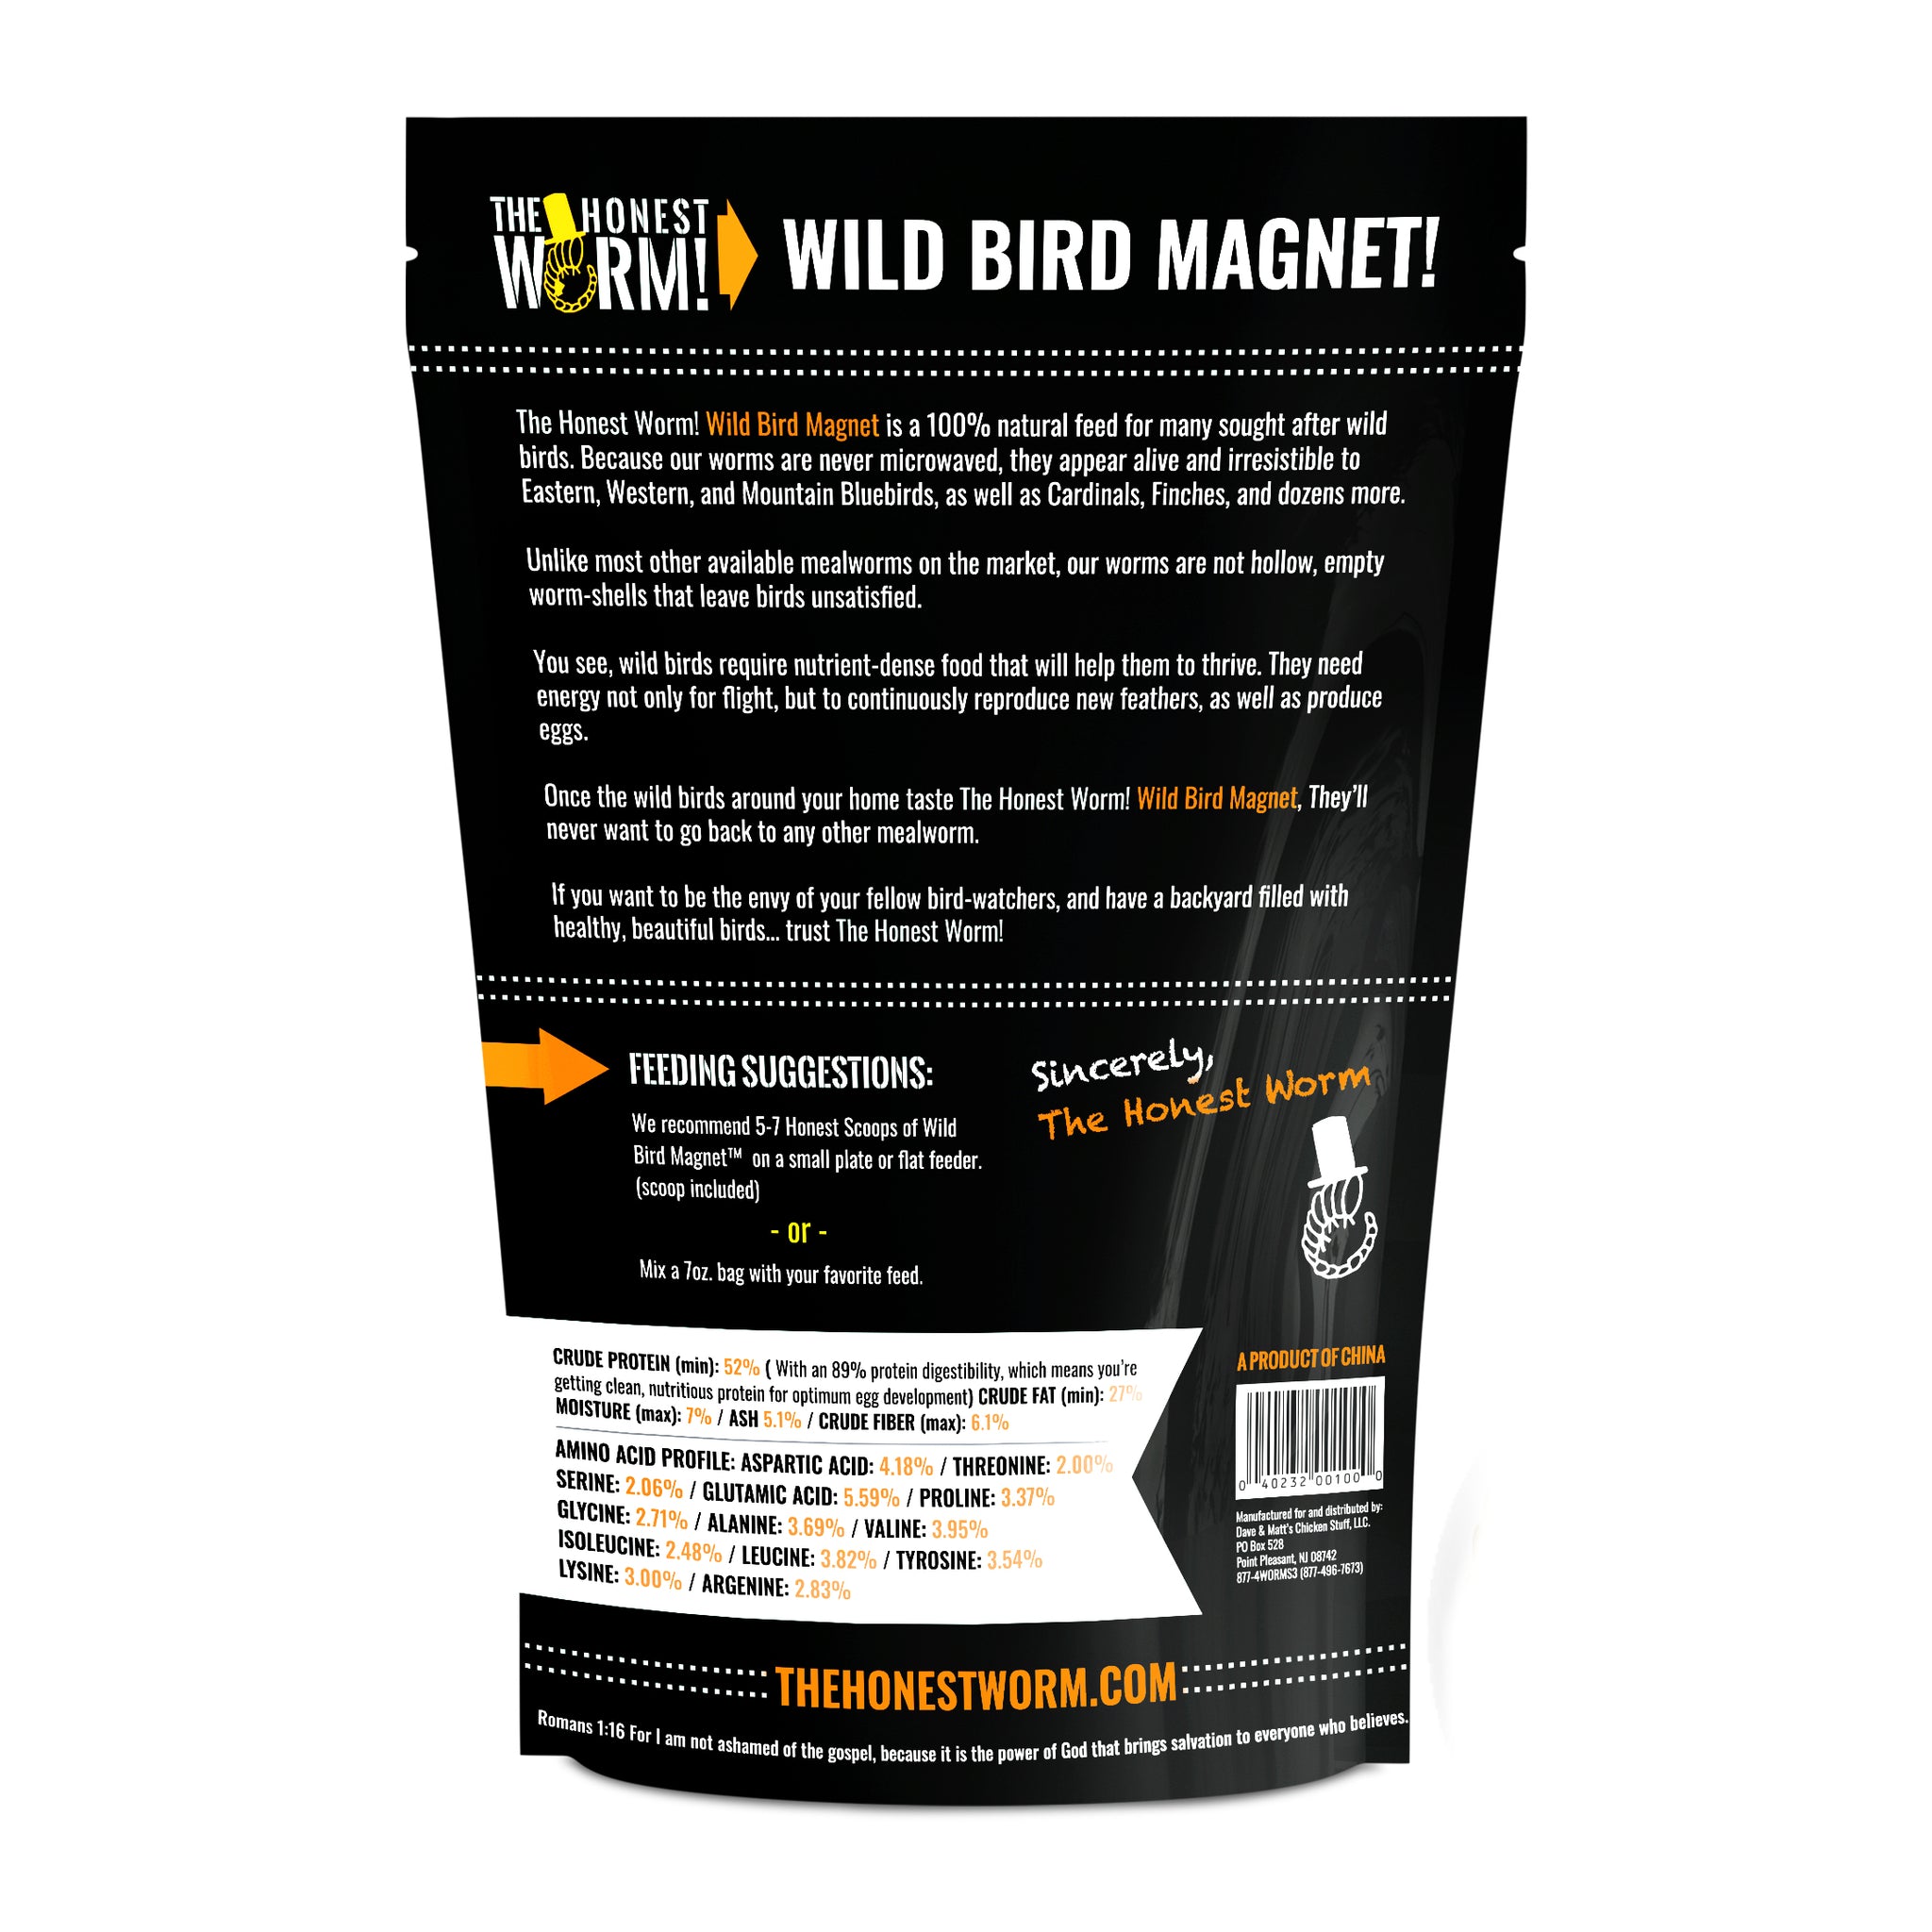 The Honest Worm! Wild Bird Magnet 7 oz Bag